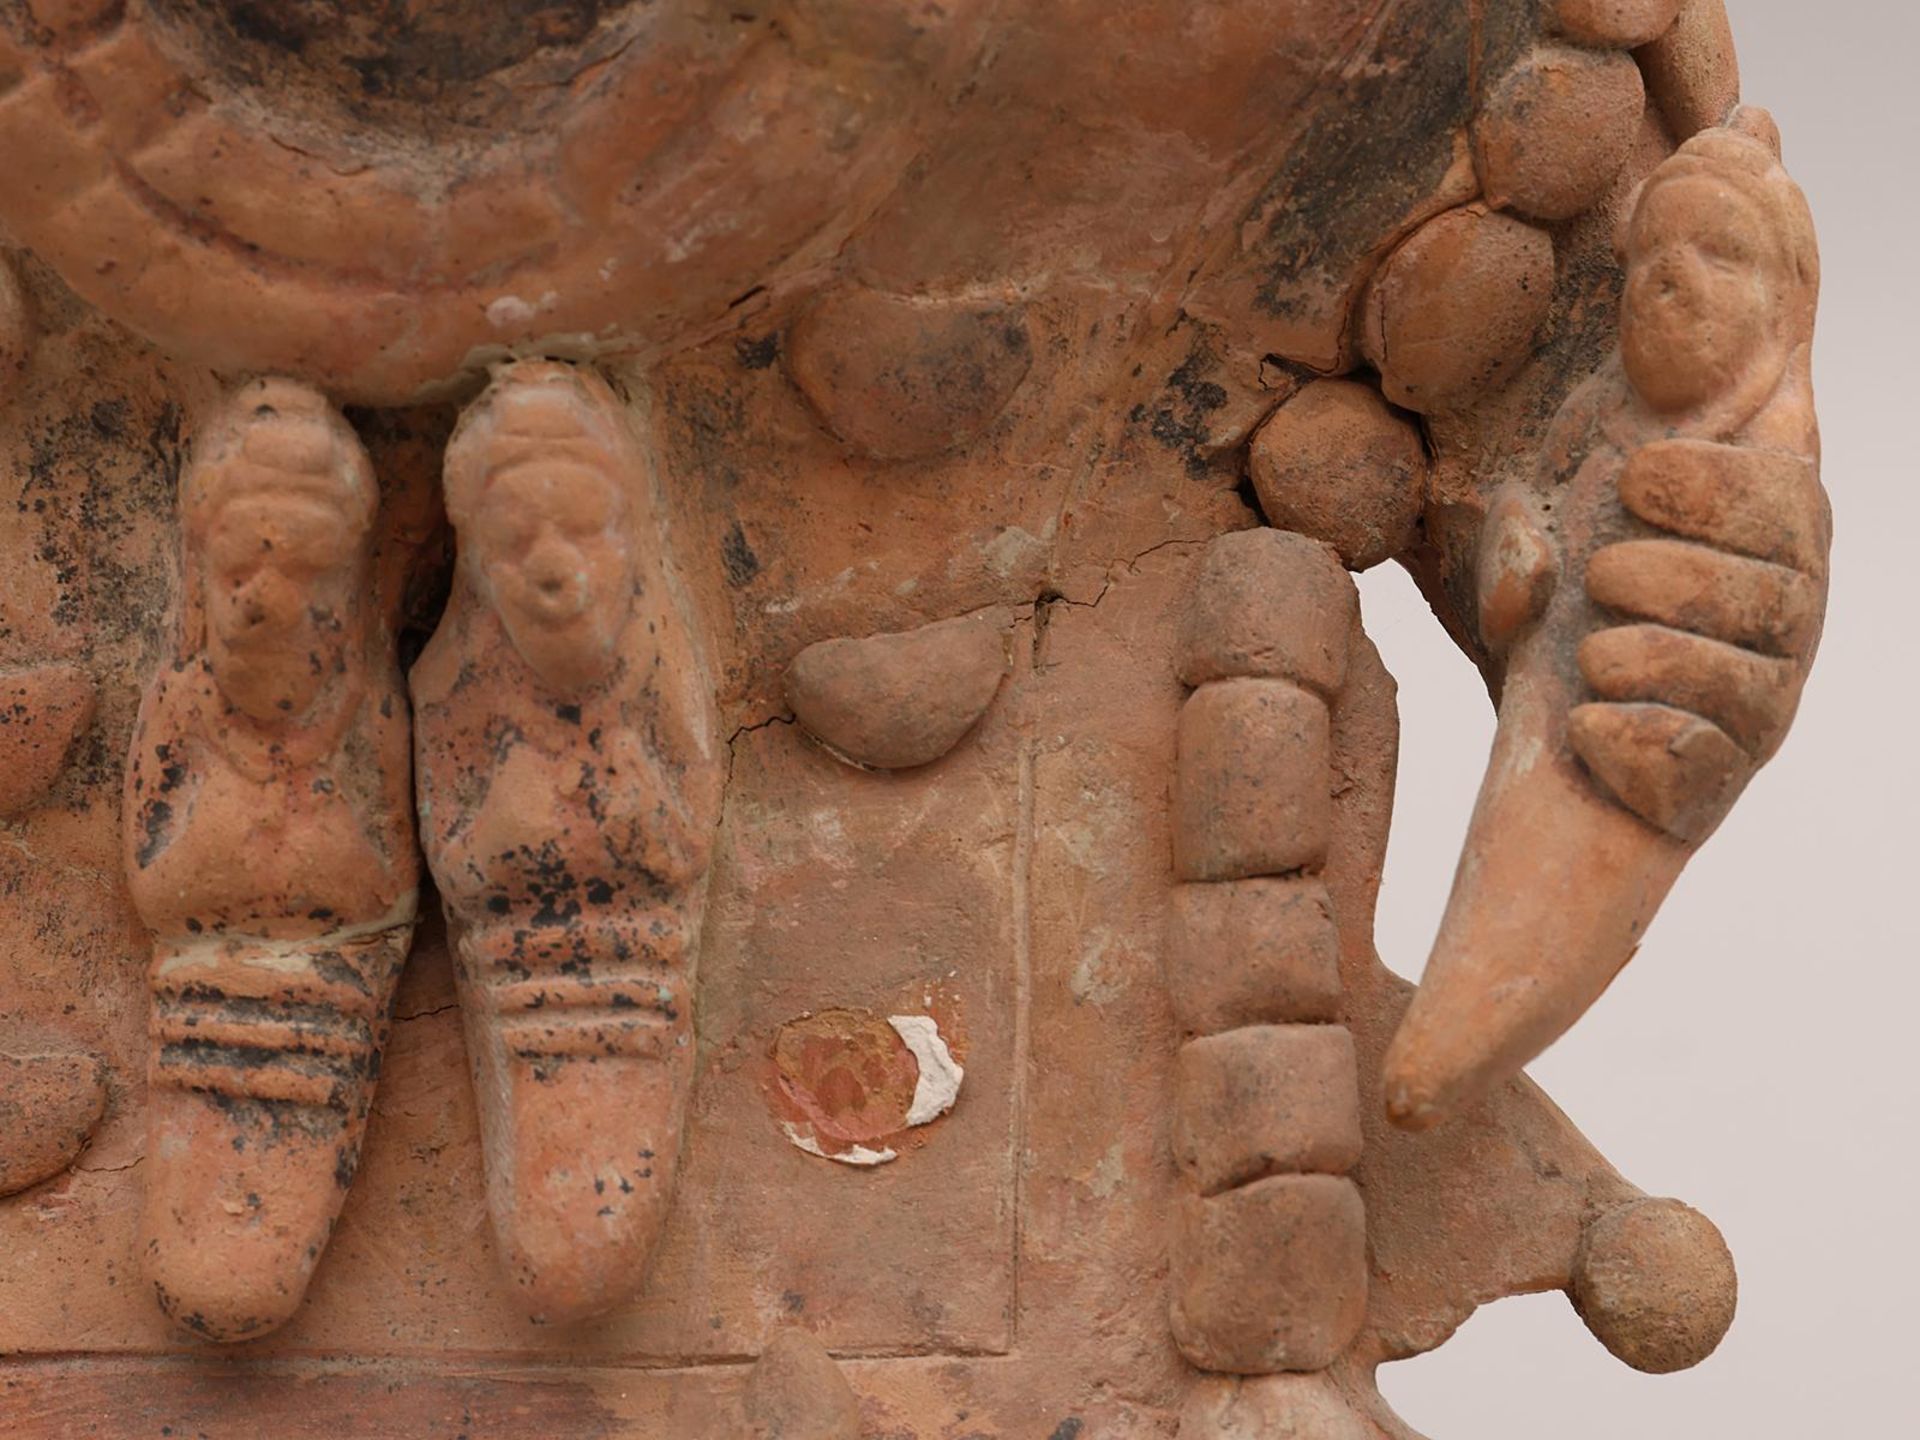 Equador, Jamacoaque, 100-500 AD, sculpture of a seated priest figure. - Image 4 of 8